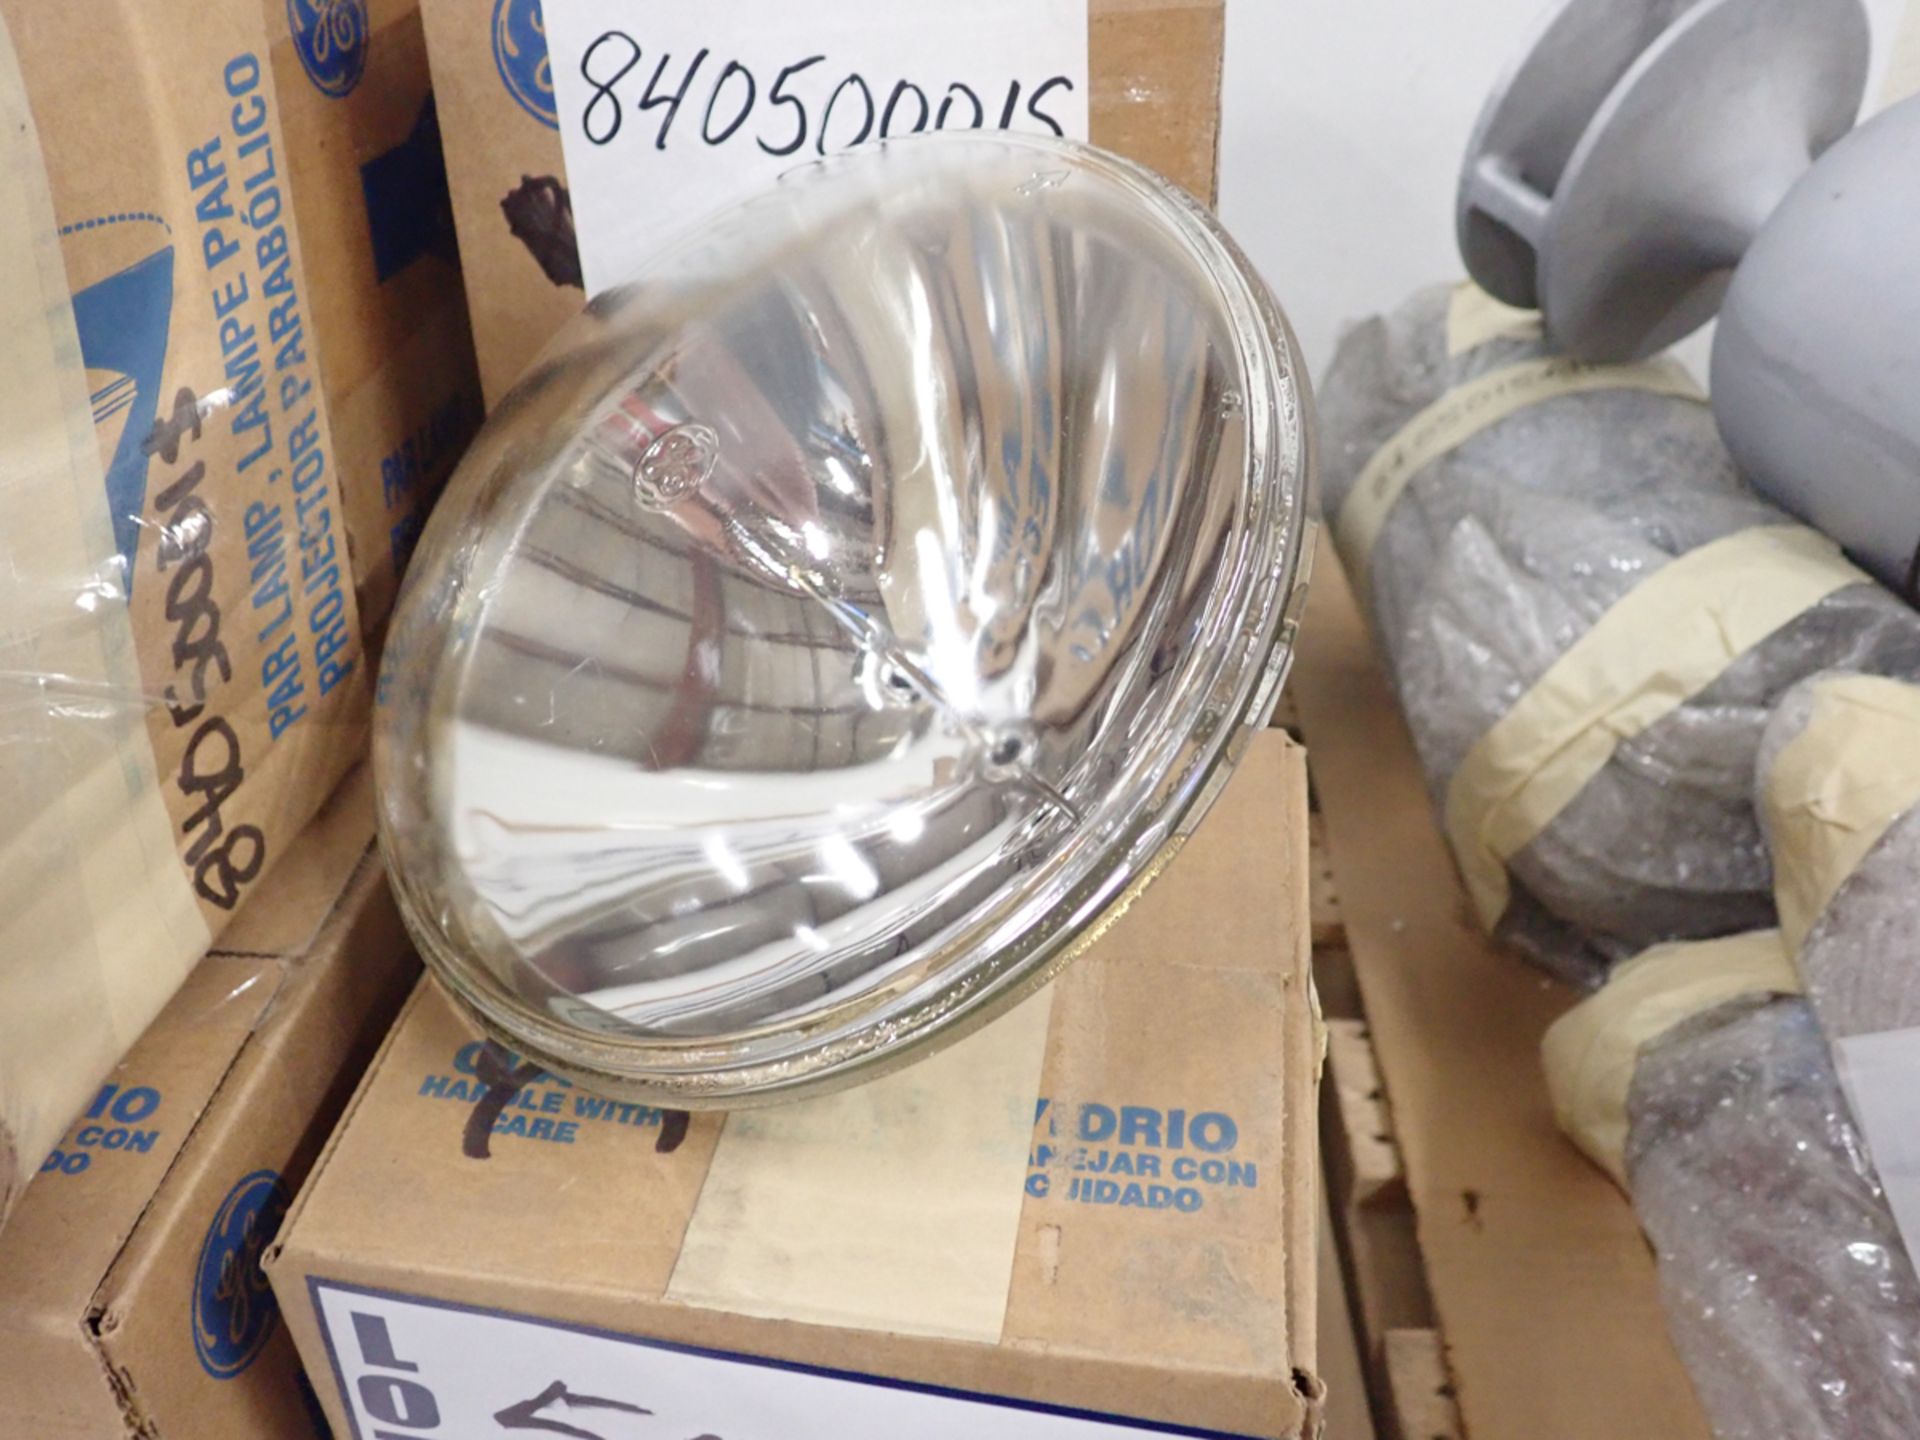 LOT OF 10 GE 350 WATTS LAMP, PAR 56 (84050001S)